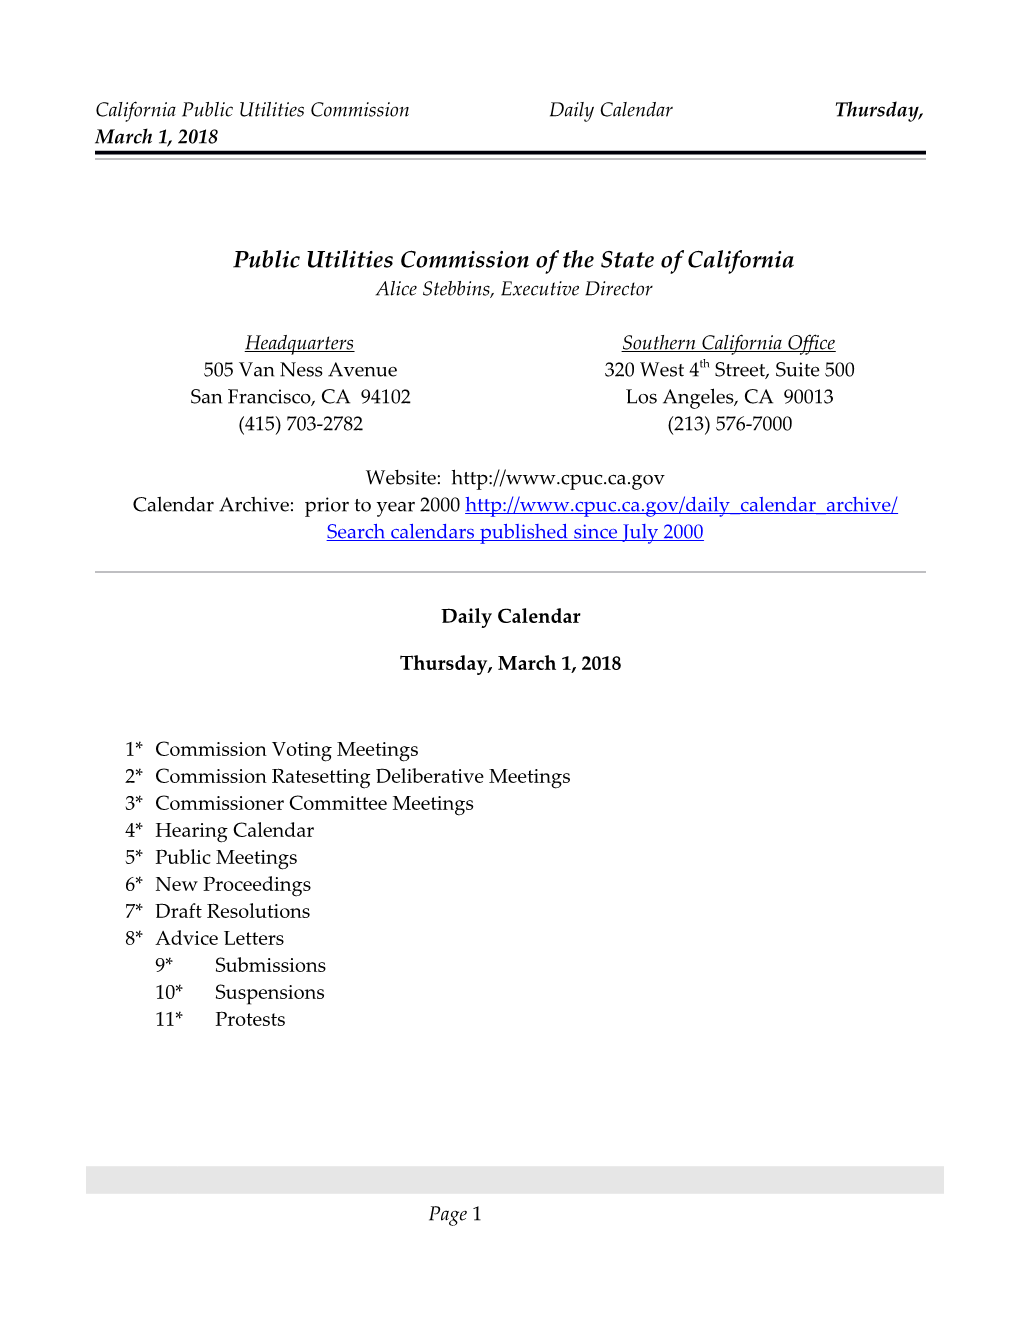 California Public Utilities Commission Daily Calendar Thursday, March 1, 2018